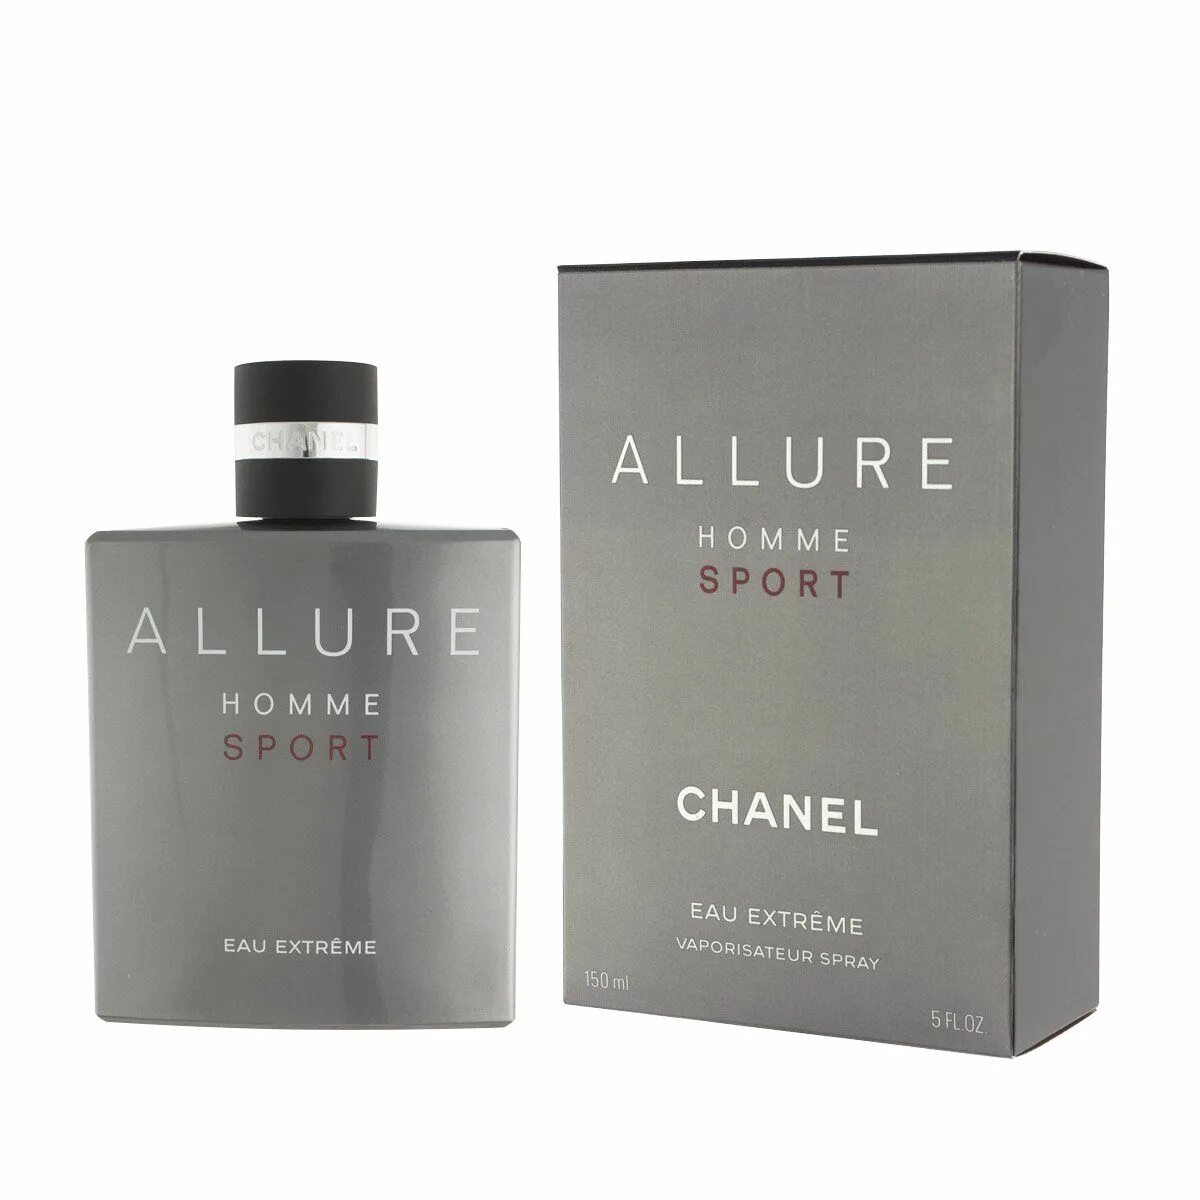 Chanel Allure Sport Eau extreme. Chanel Allure homme Sport extreme. Chanel Allure Sport. Chanel Allure homme Sport 150ml. Chanel allure homme sport eau